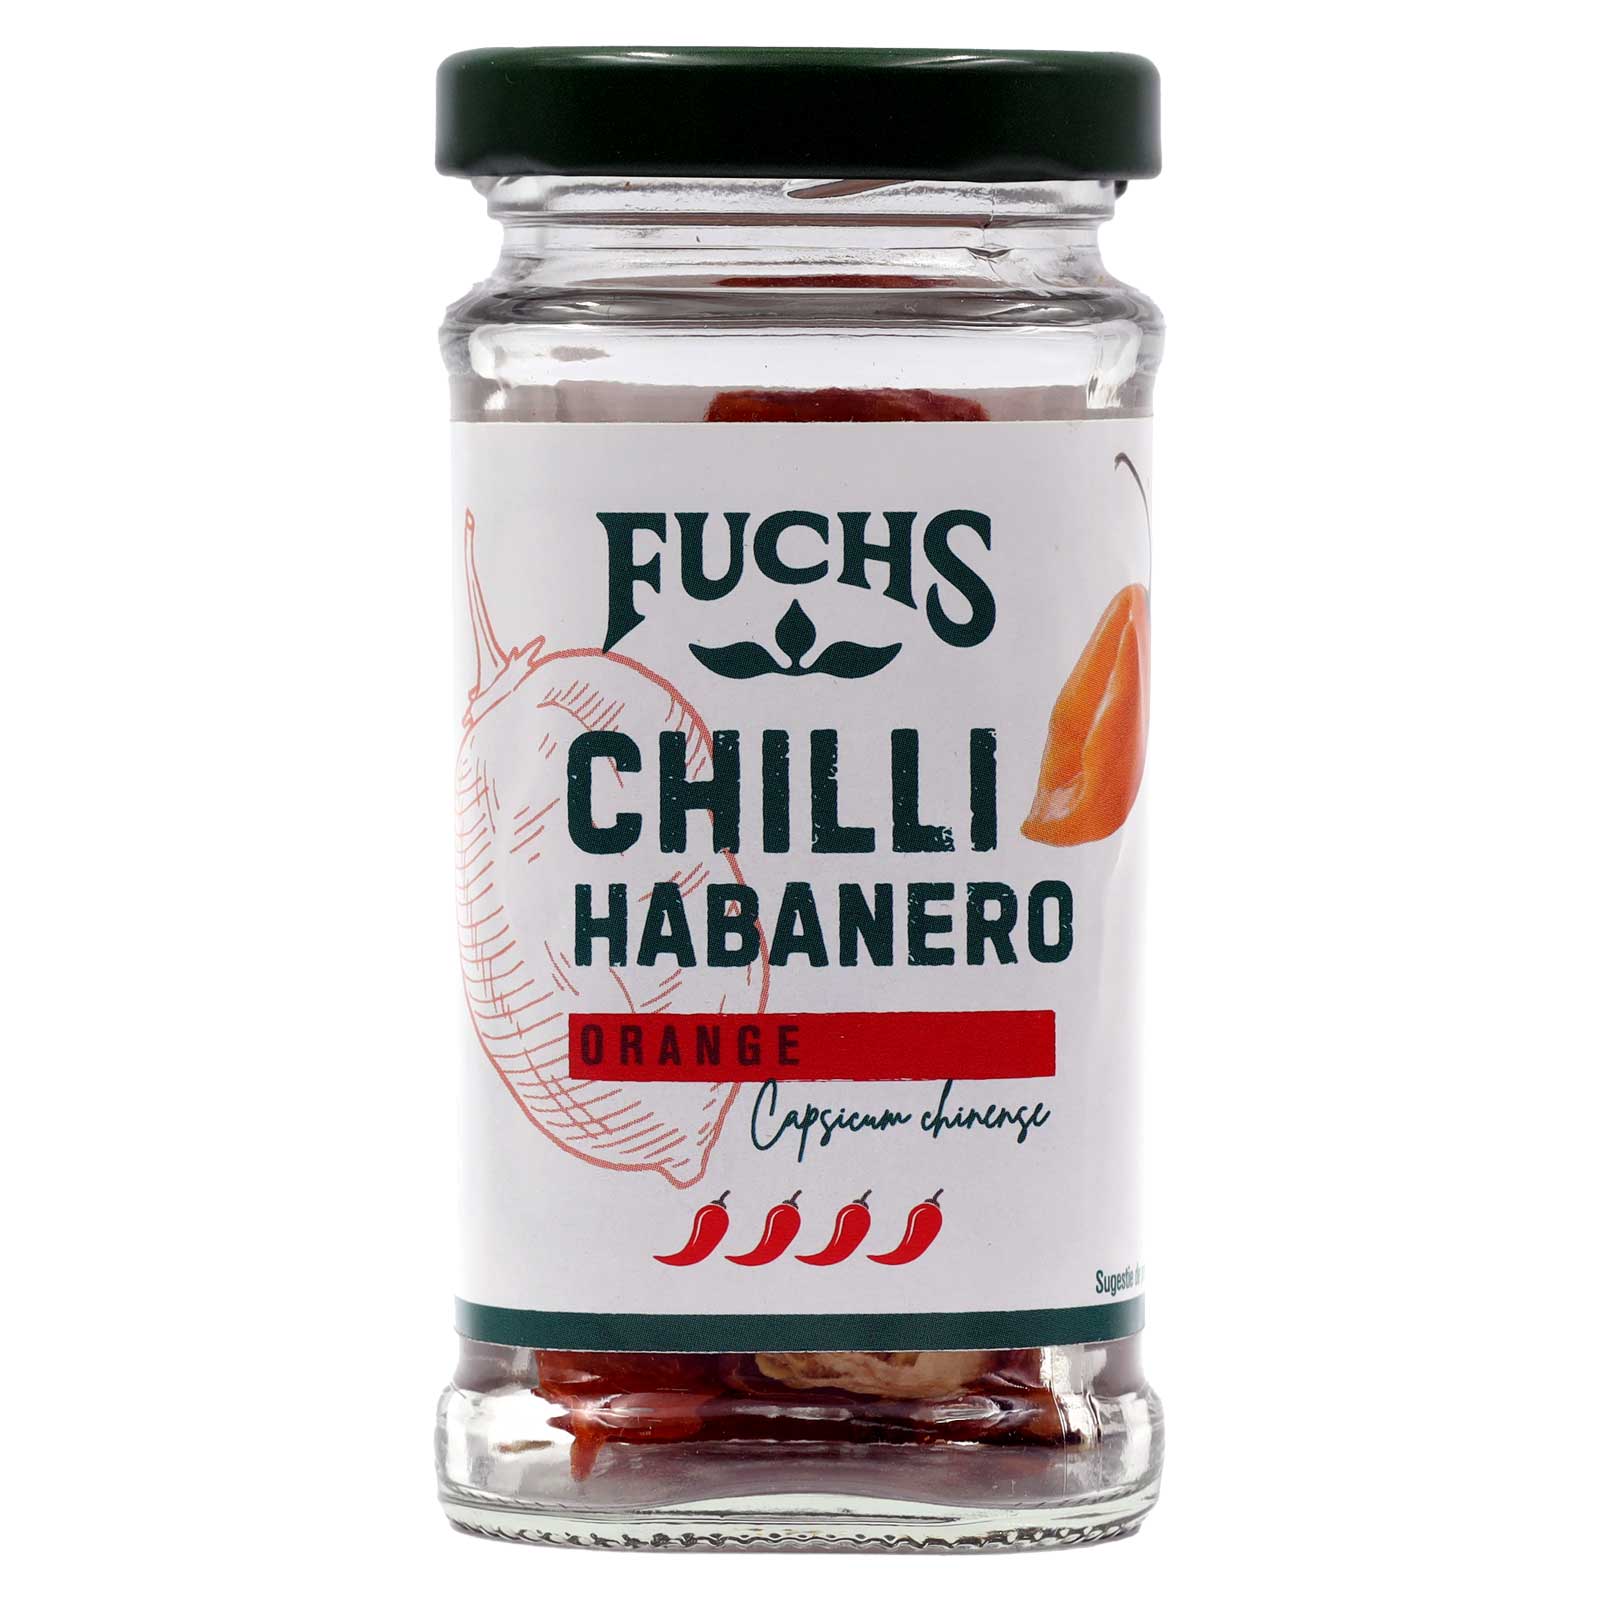 Chilli Habanero Orange, Fuchs,  8G